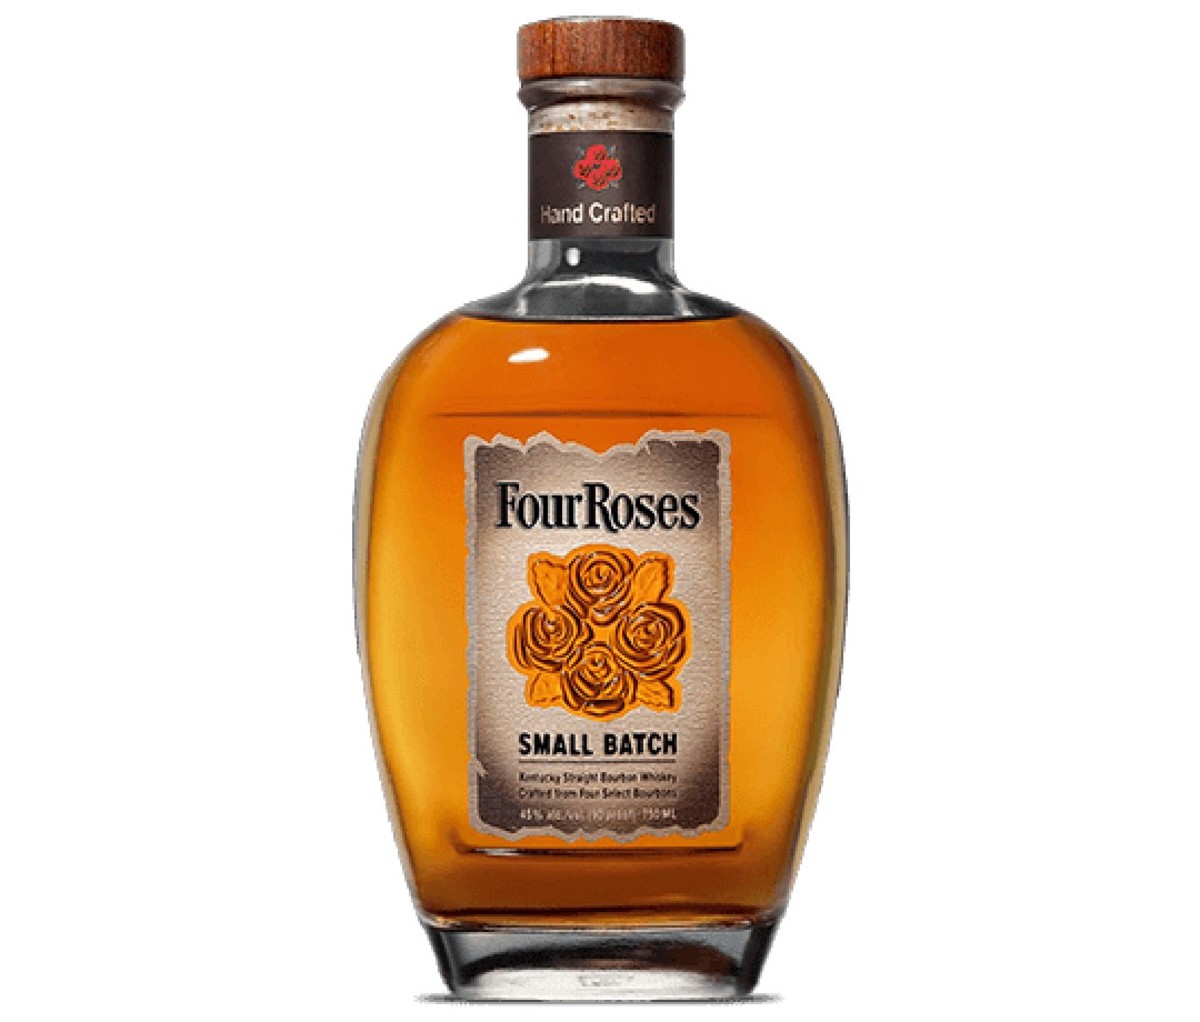 Bottle of Four Roses Small Batch Bourbon